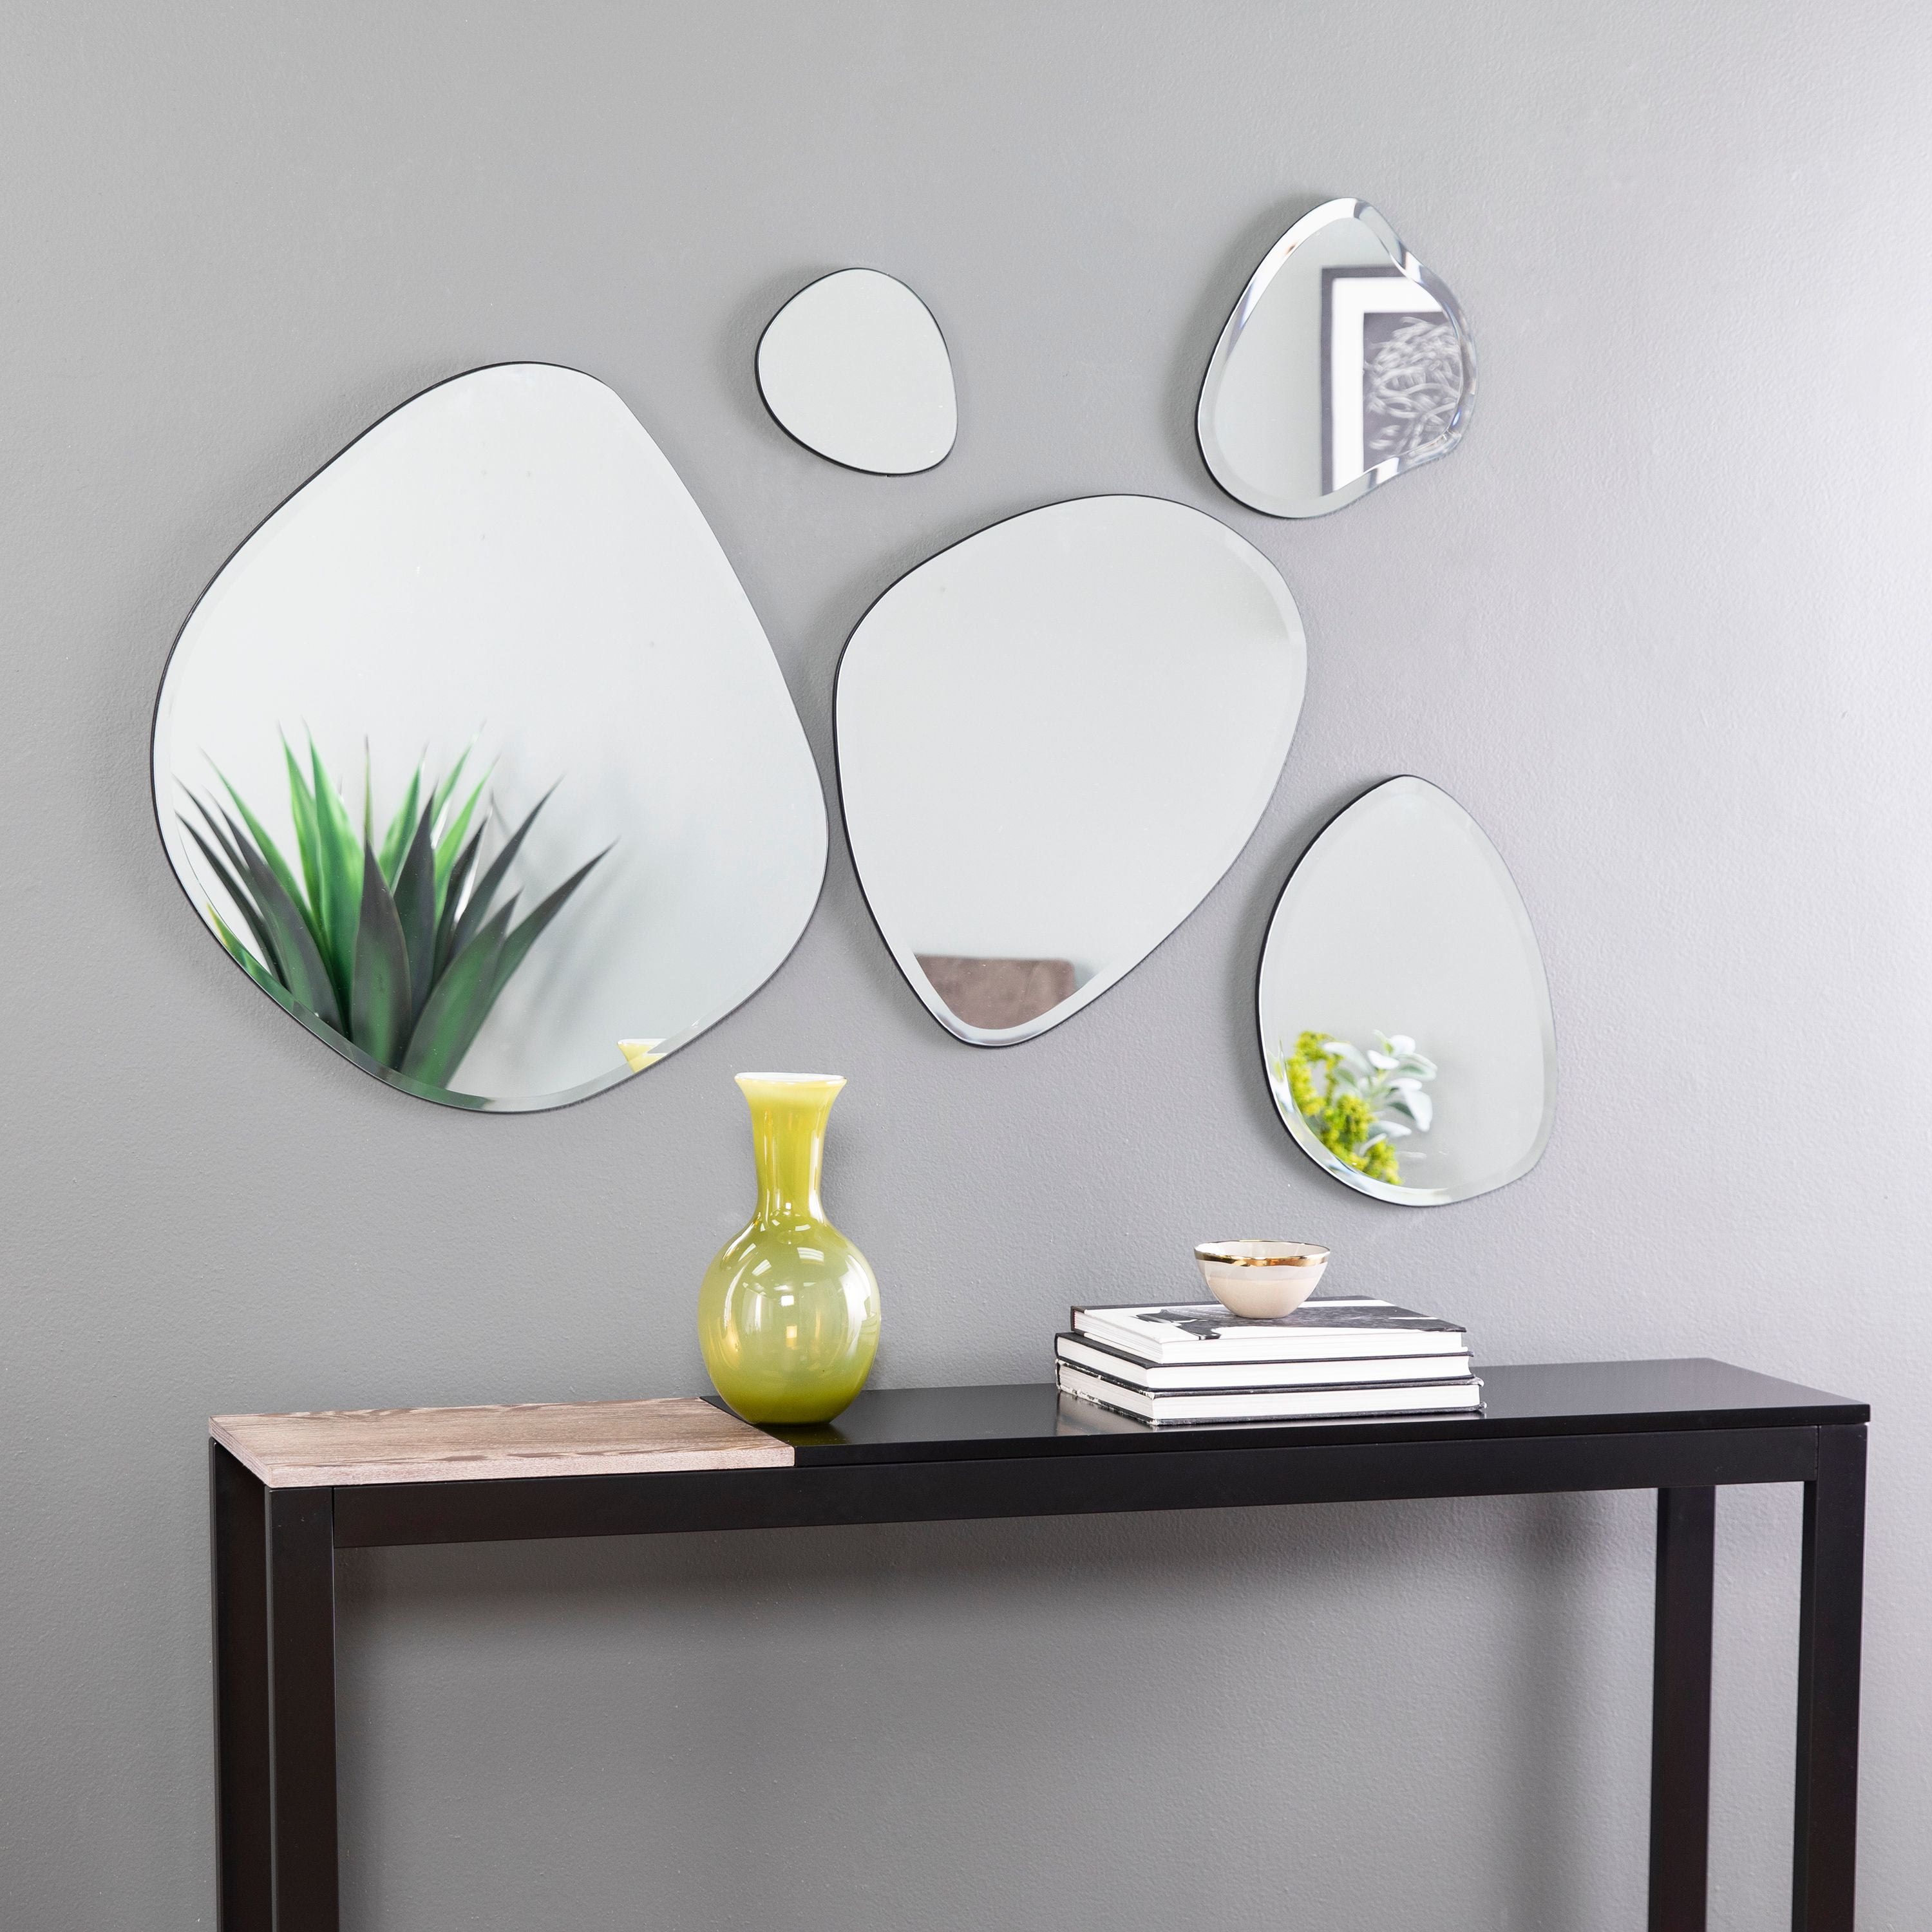 Estelle Glam 5pc Decorative Mirror Set, Shaped Wall Mirrors Set